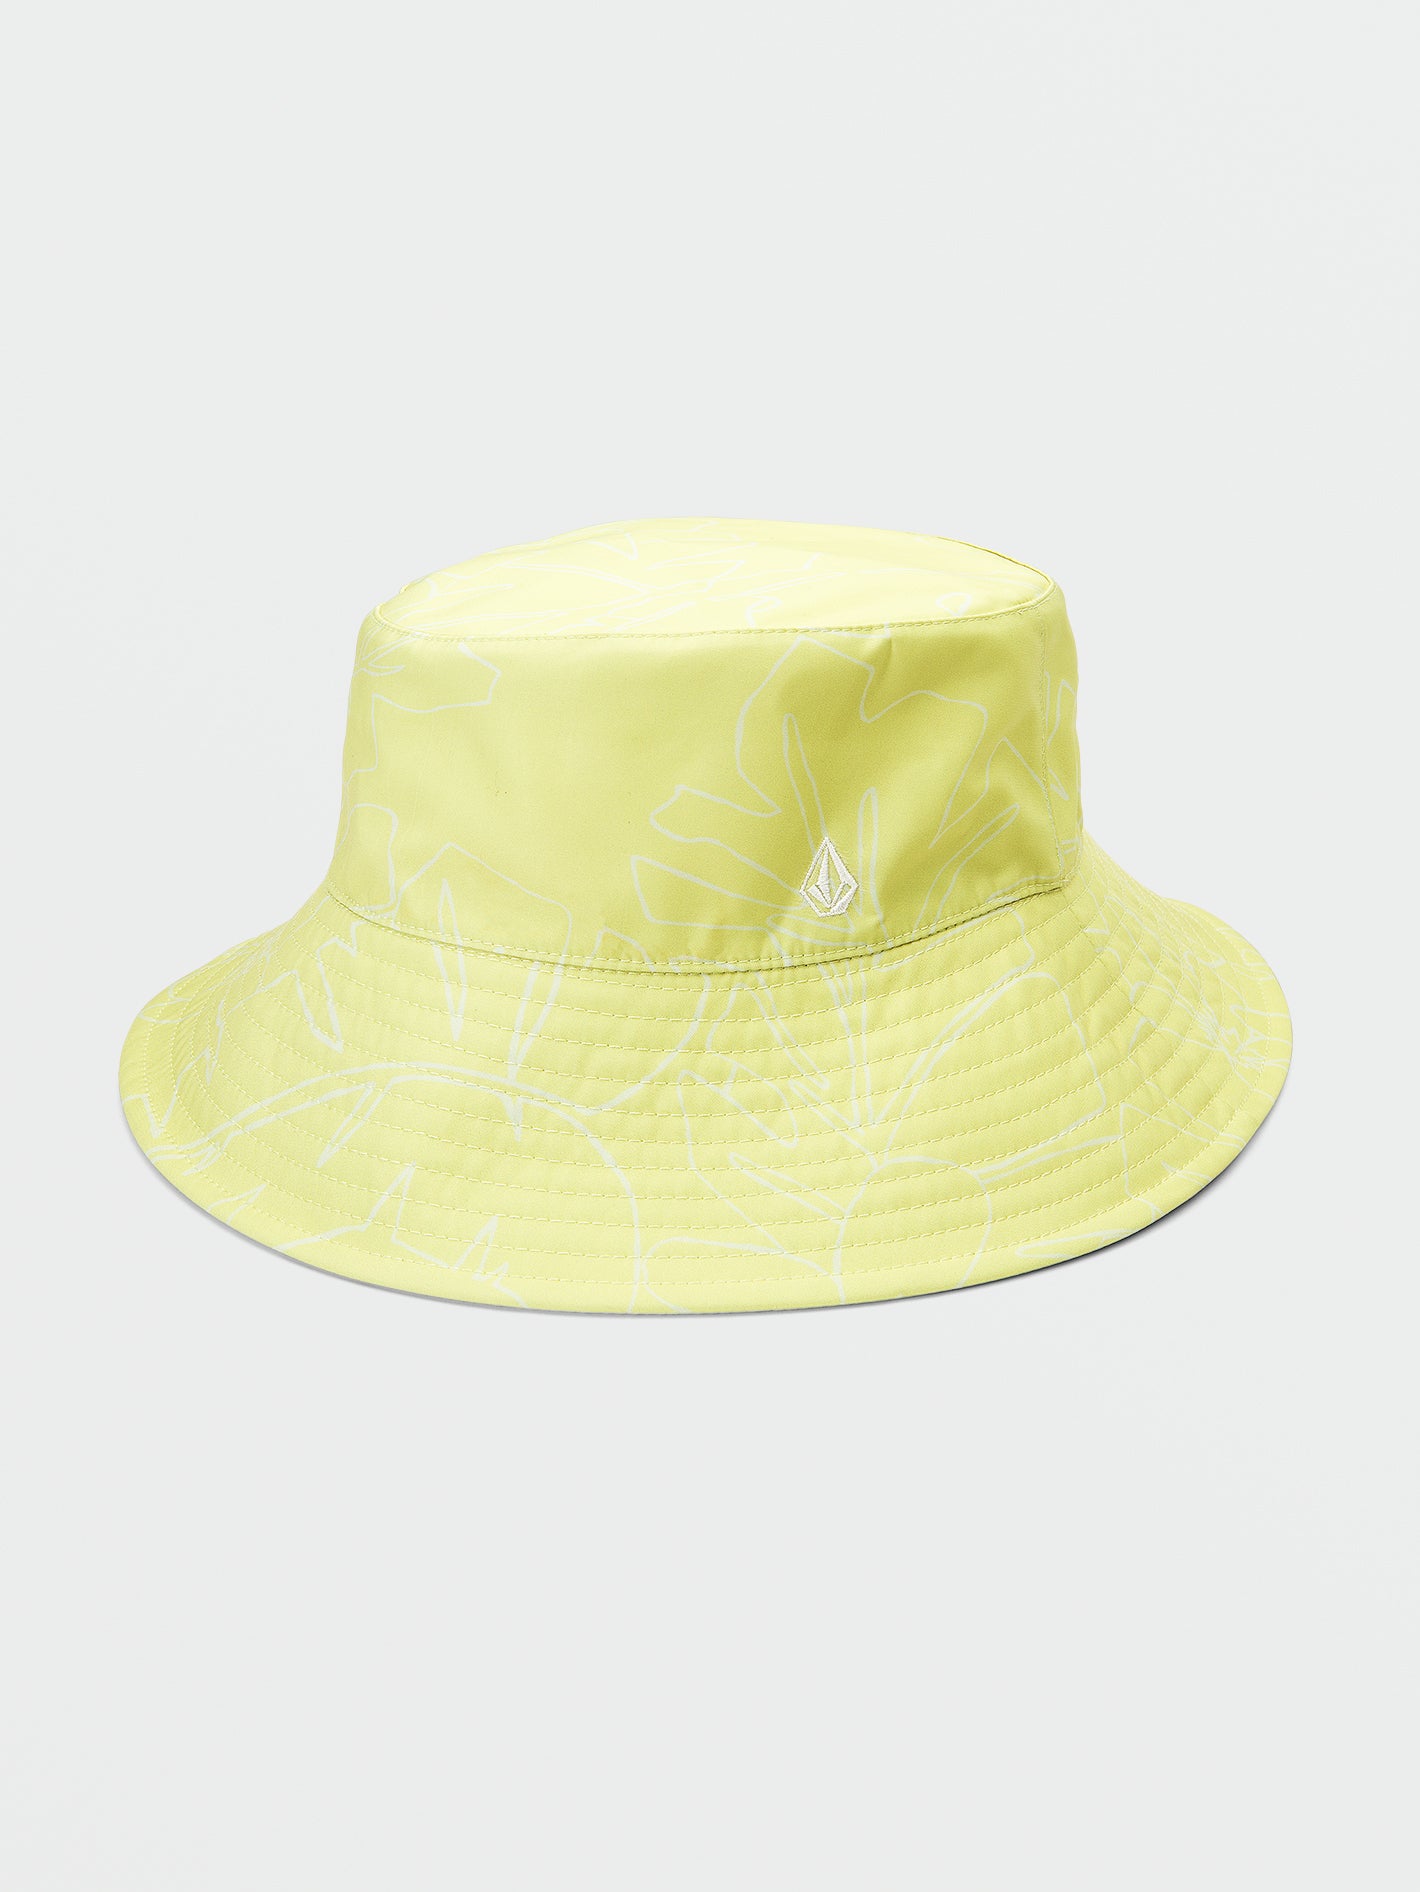 CoCopeaunt HT533 Classic Solid Winter Hat for Men Women Unisex